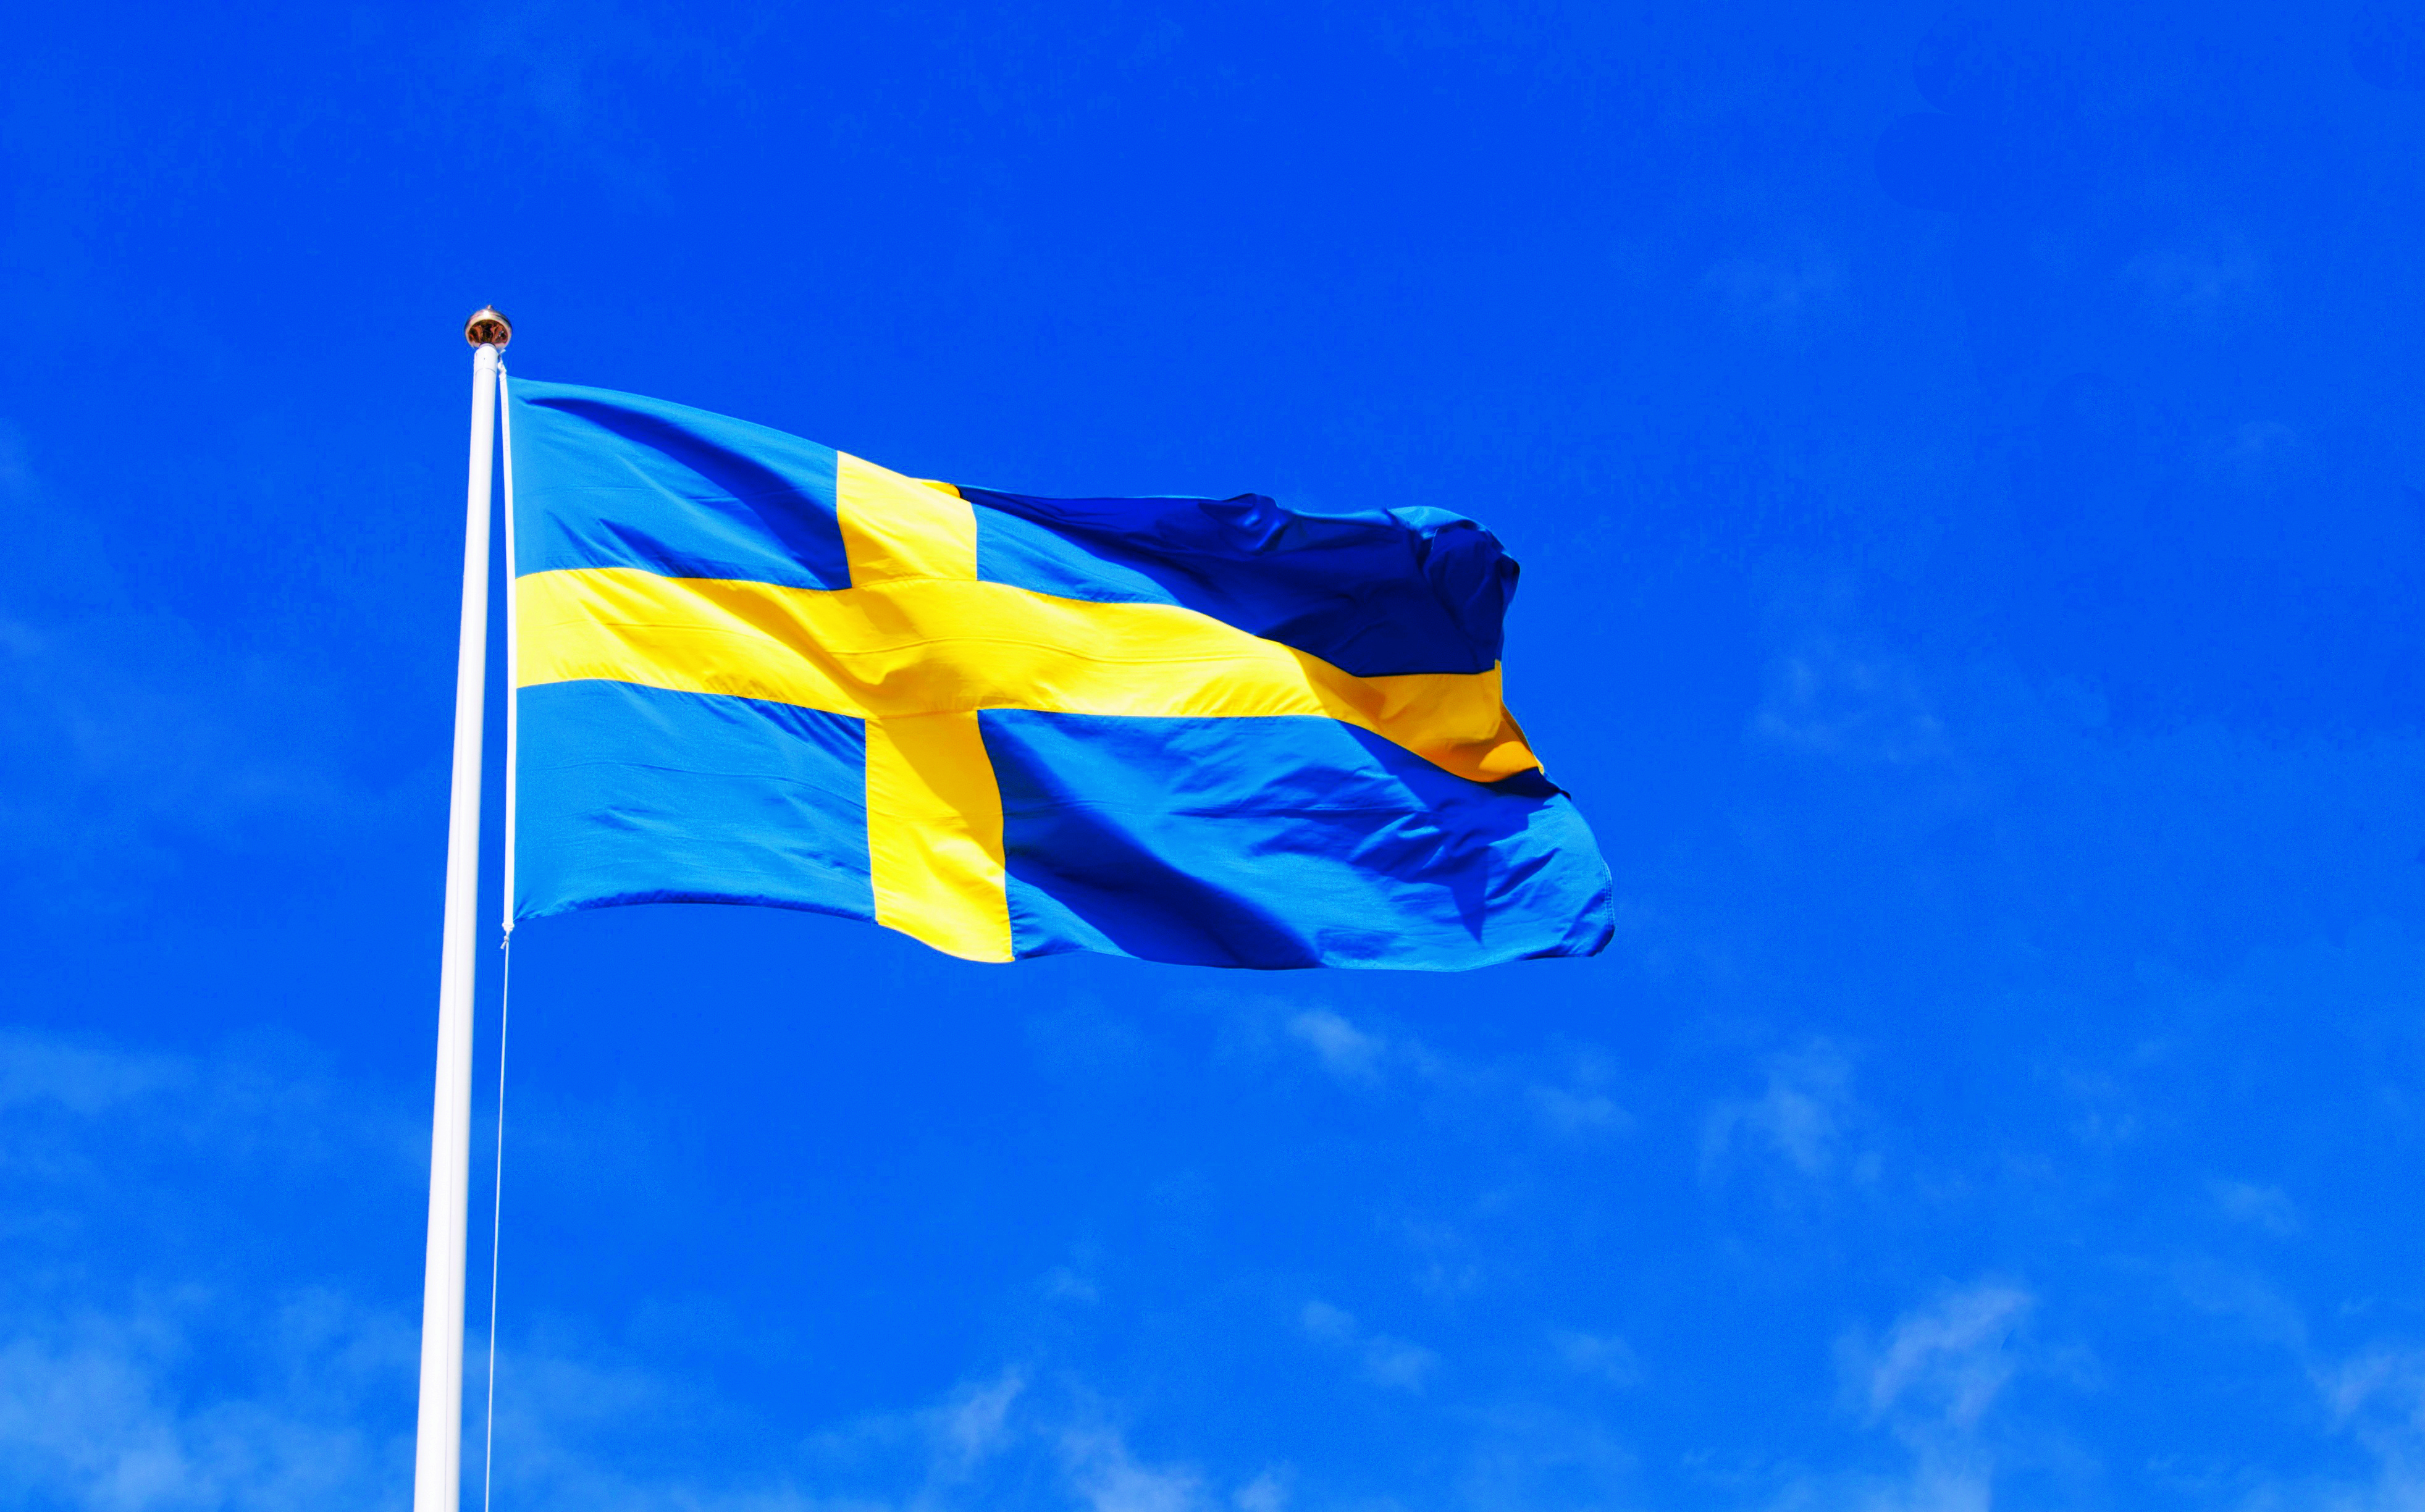 svensk flagga vajar i vinden